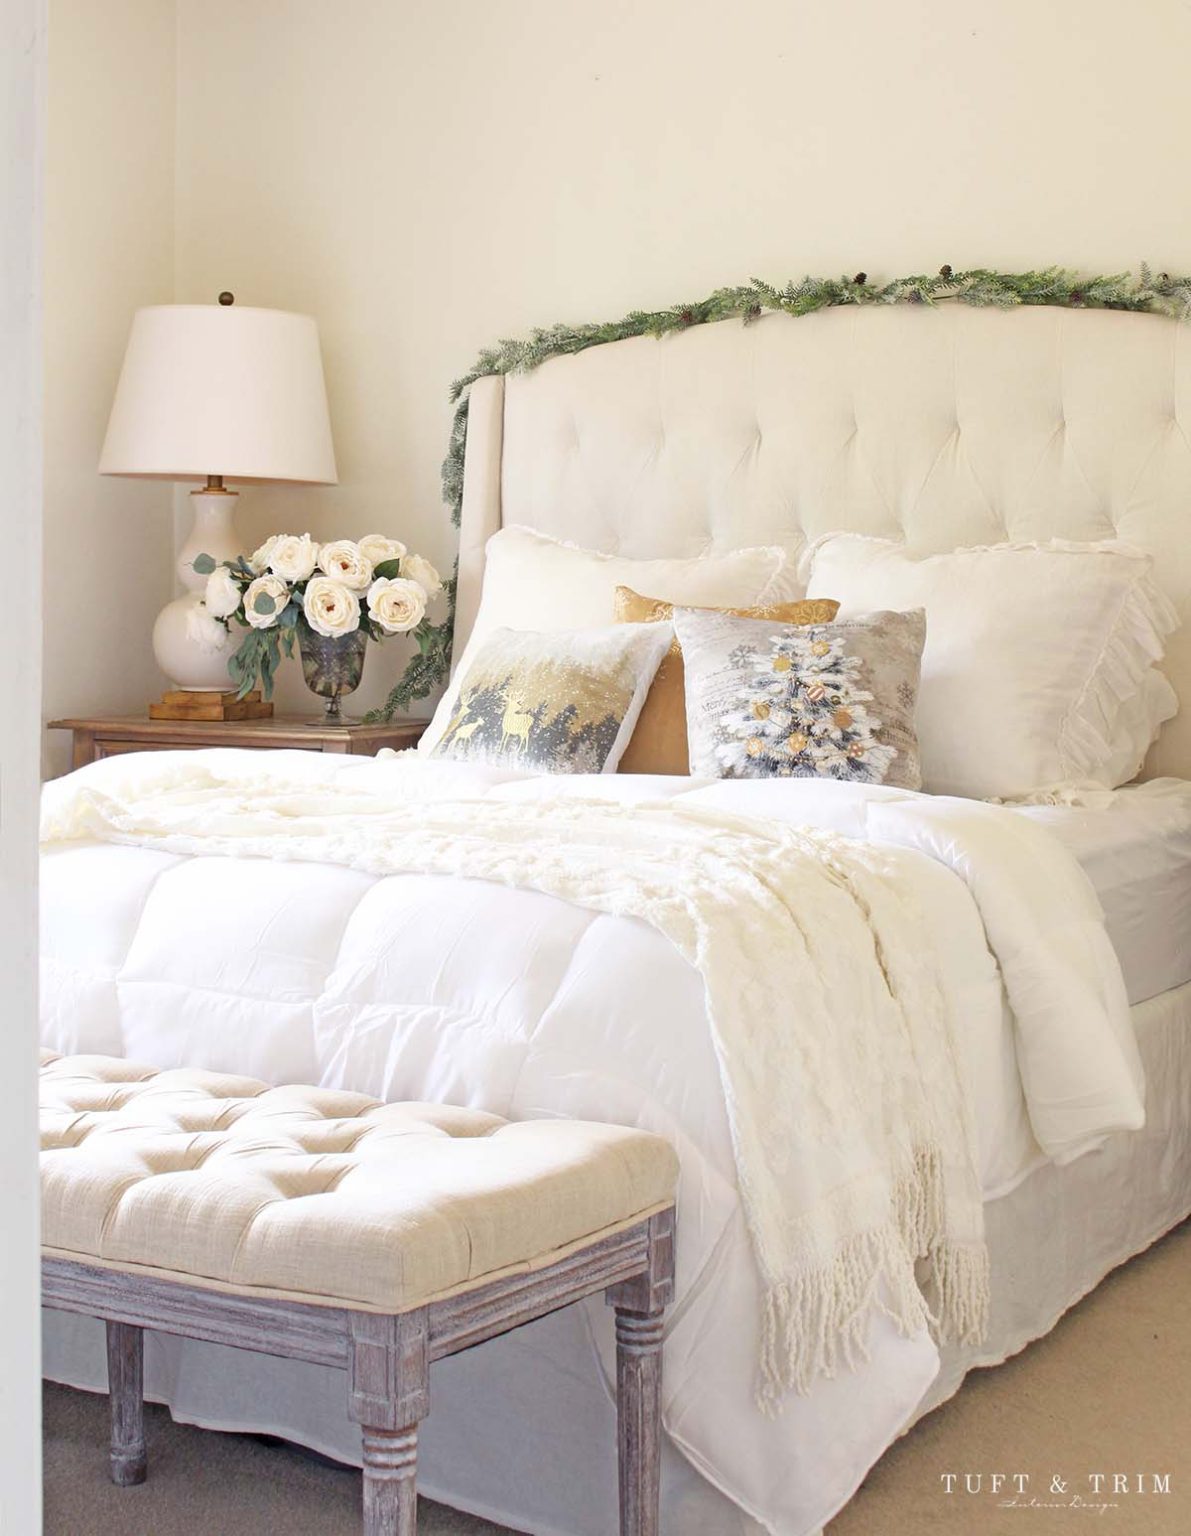 Cozy Holiday Bedroom Essentials - Tuft & Trim